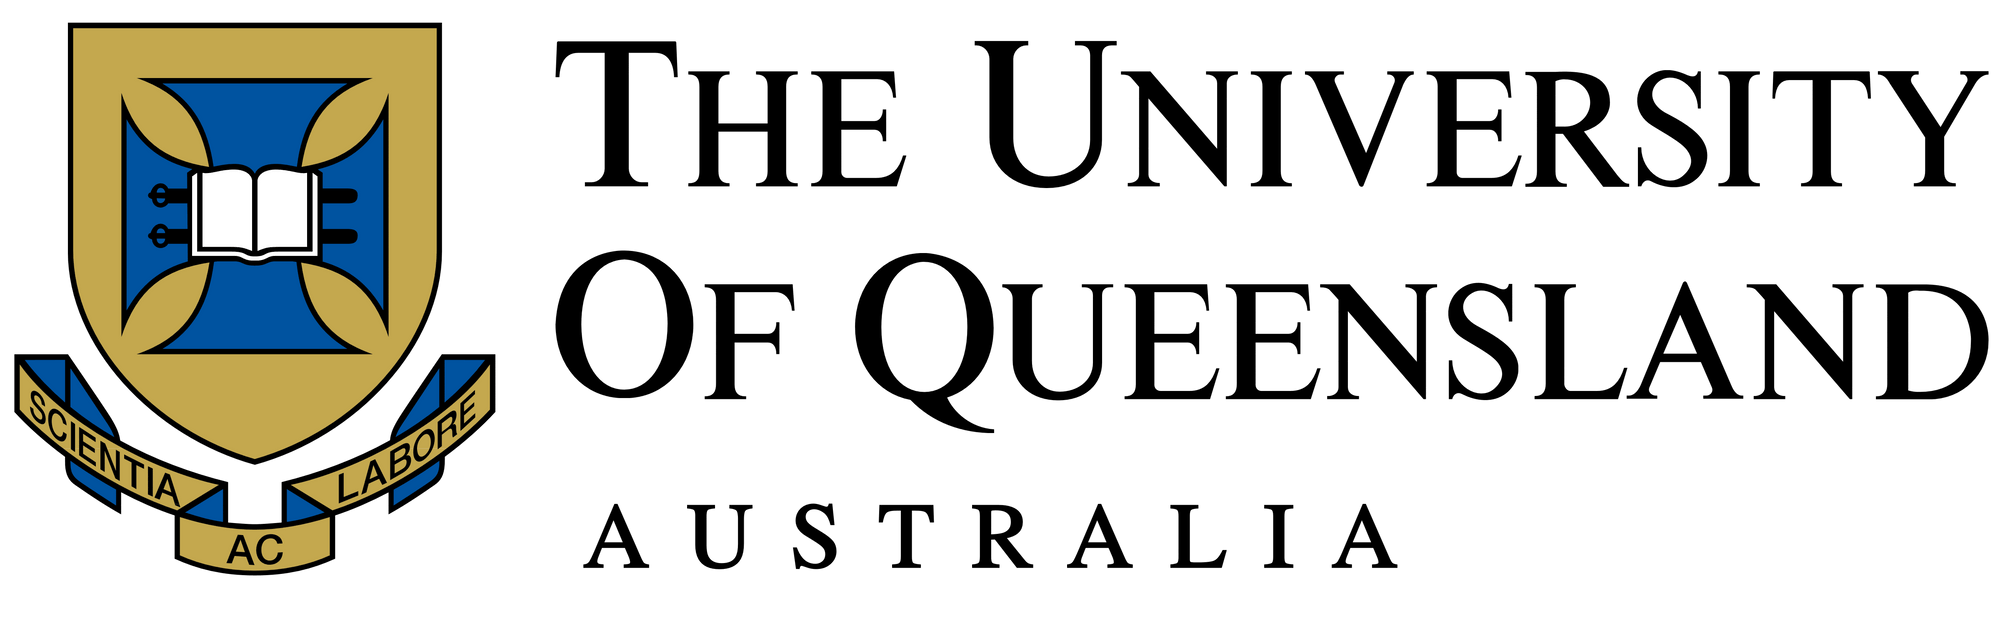 The_University_Of_Queensland_logo_logotype.png